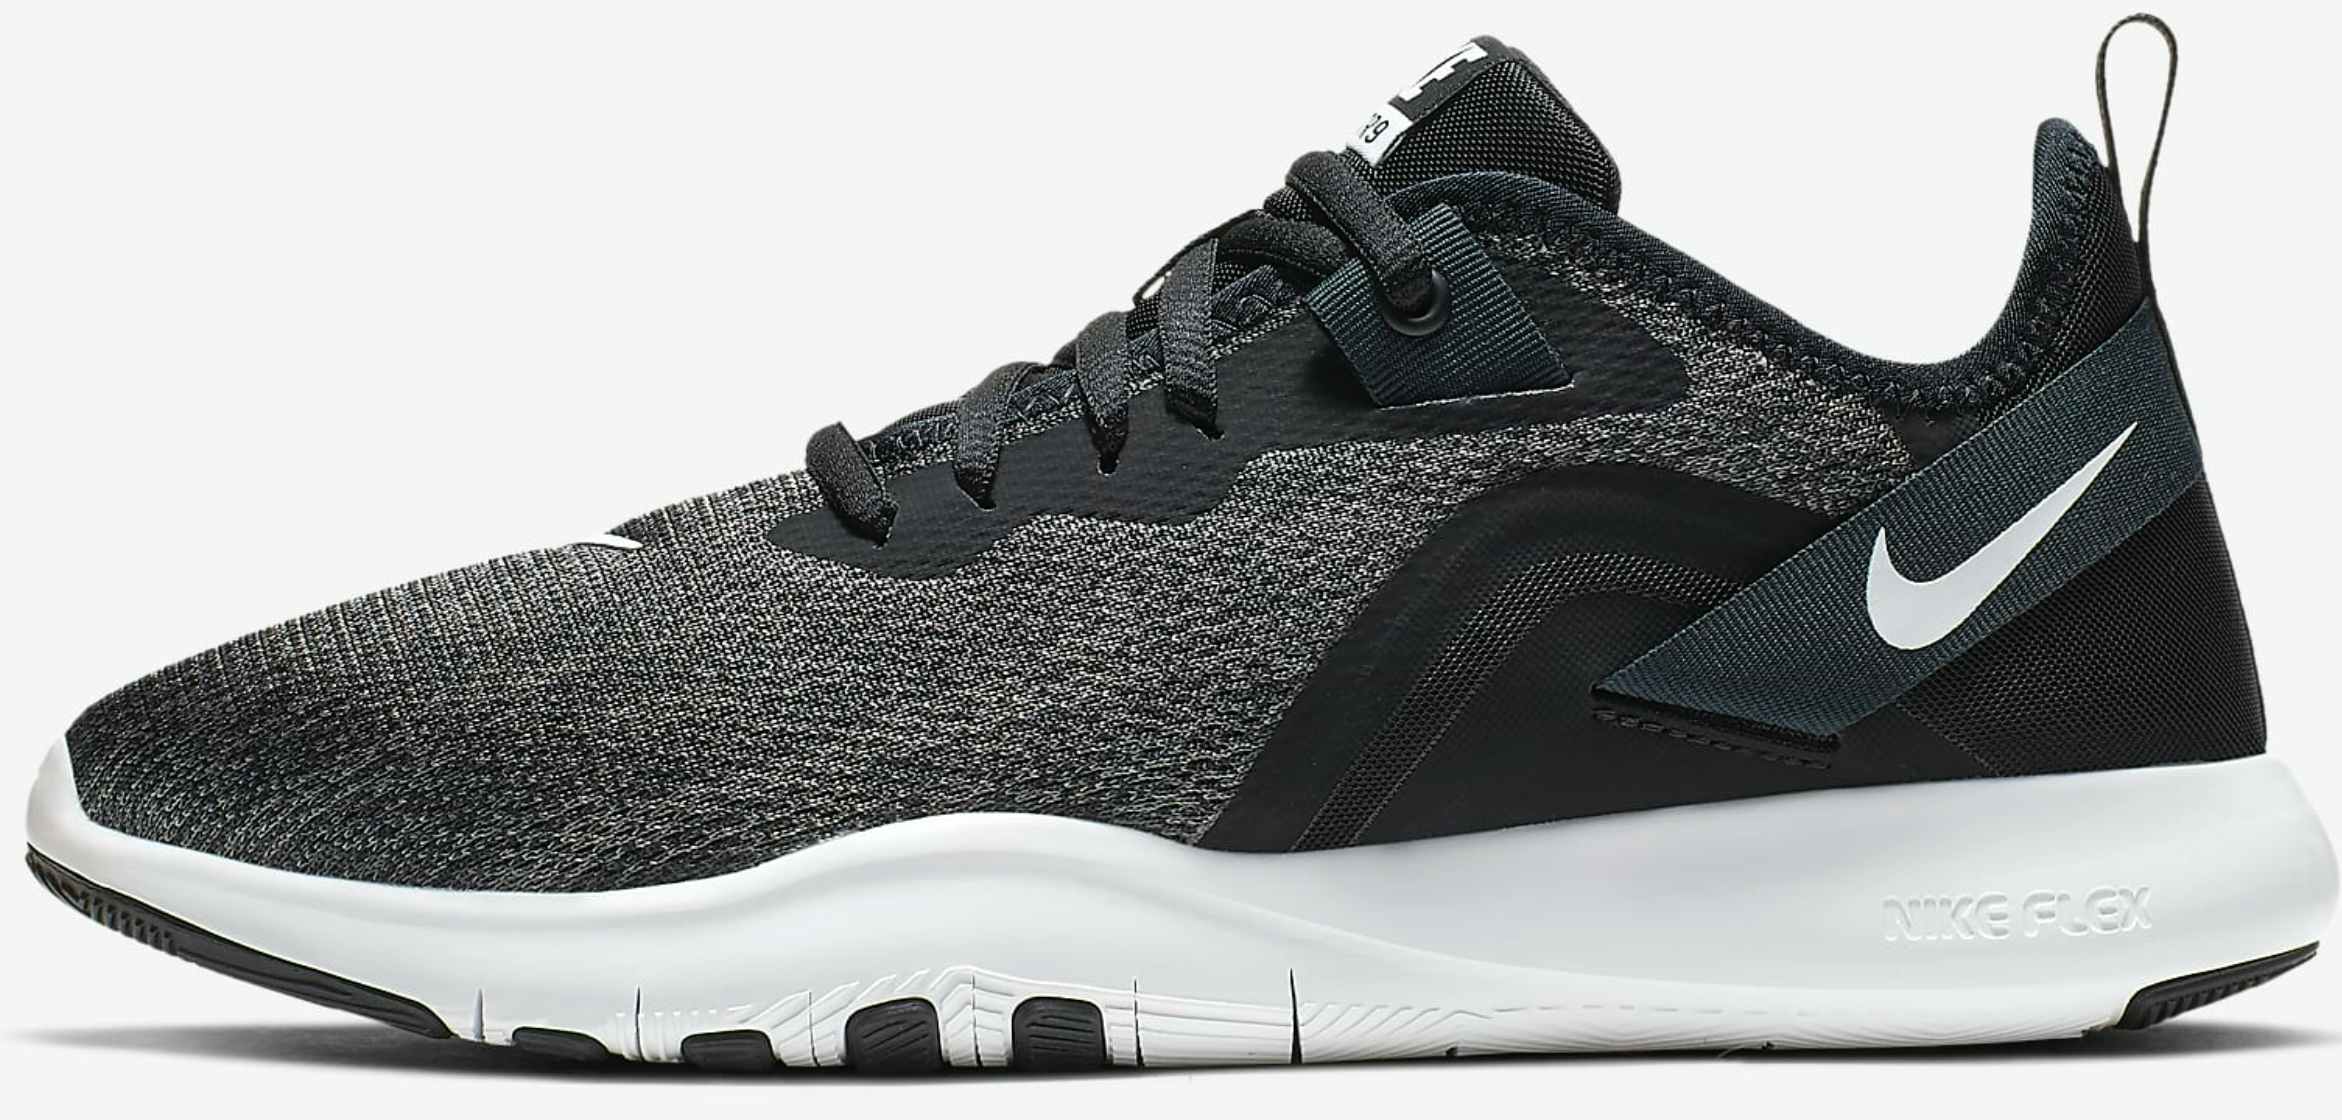 Women's Shoe from Nike